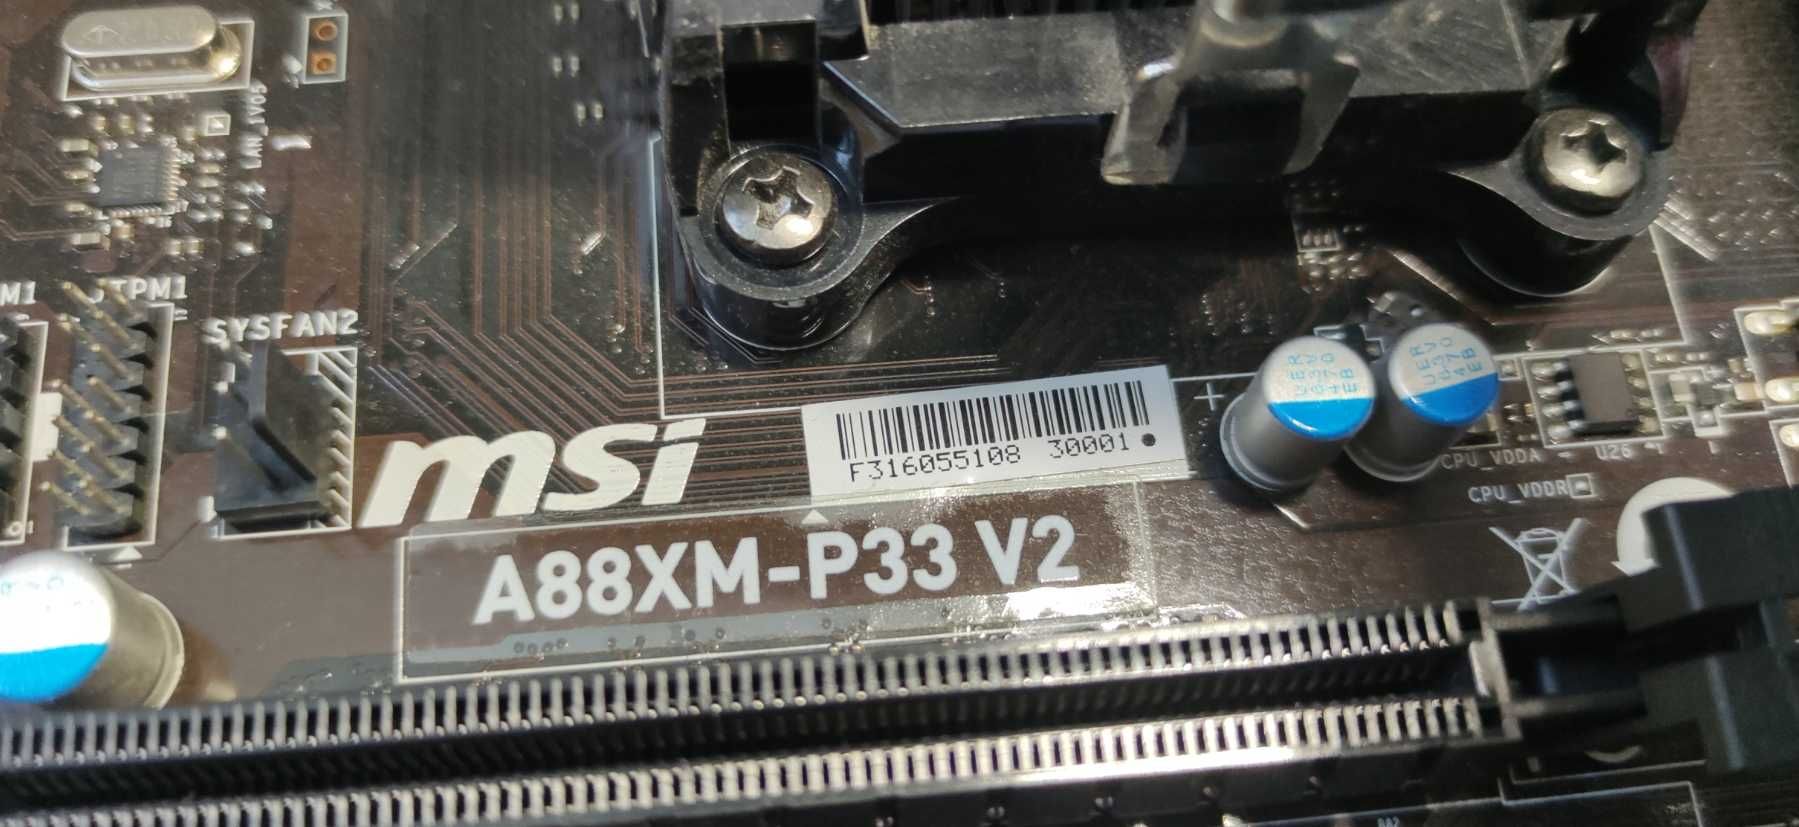 MSI A88XM-P33 V2 Micro ATX + Procesor + Pamięci